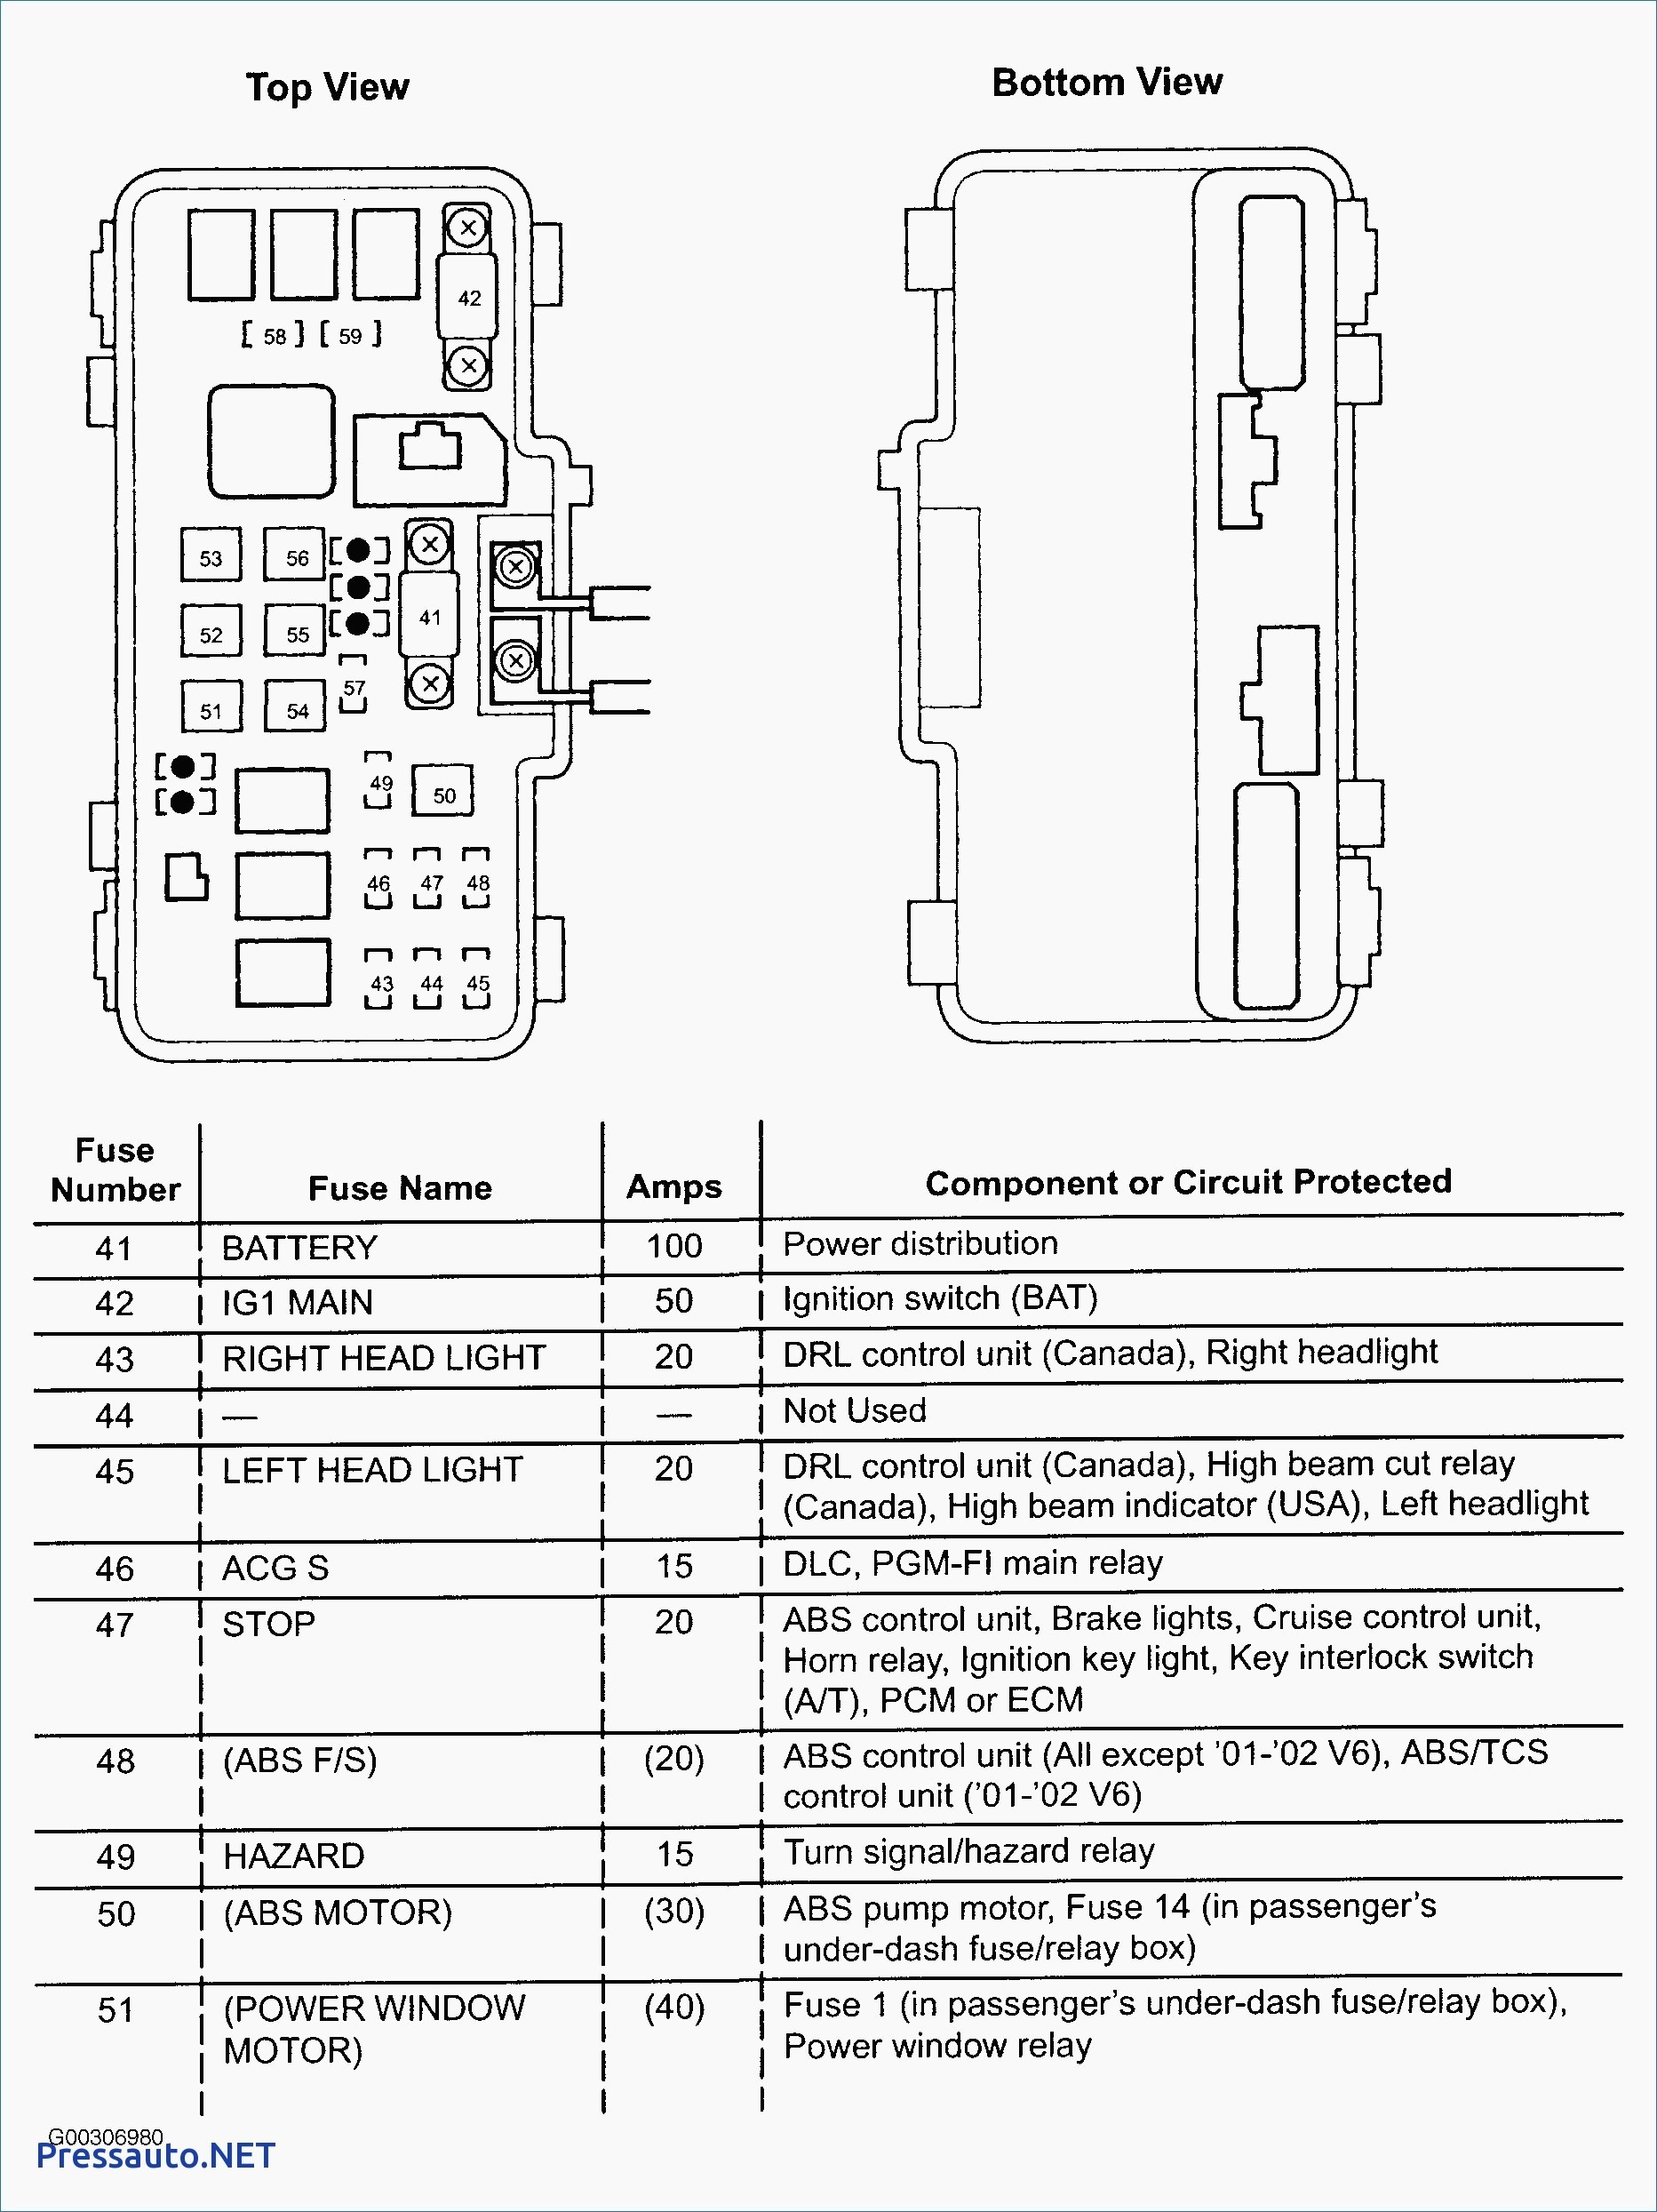 2005 Hyundai Accent Engine Diagram Honda Accord 1994 Engine Diagram Best 2002 Honda Accord Wiring Of 2005 Hyundai Accent Engine Diagram